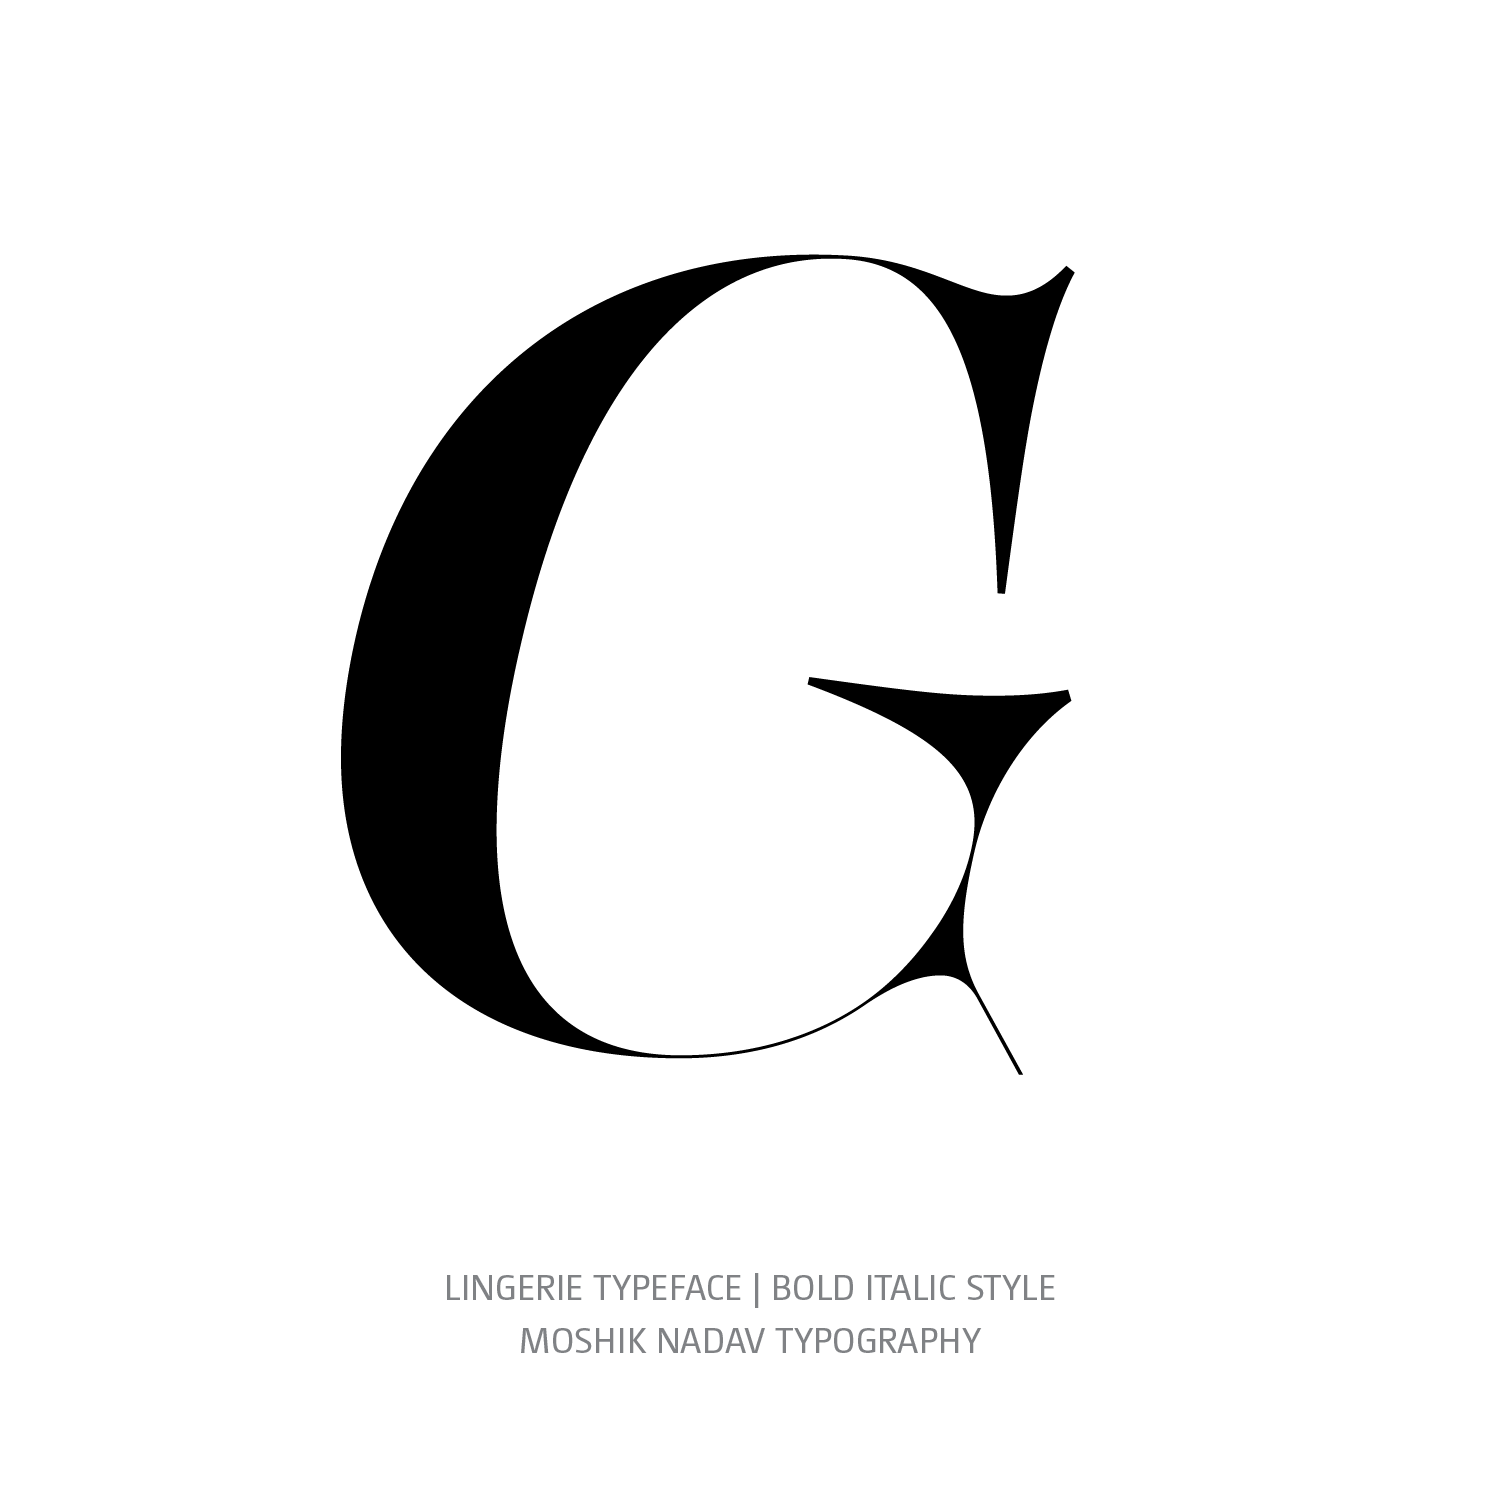 Lingerie Typeface Bold Italic G